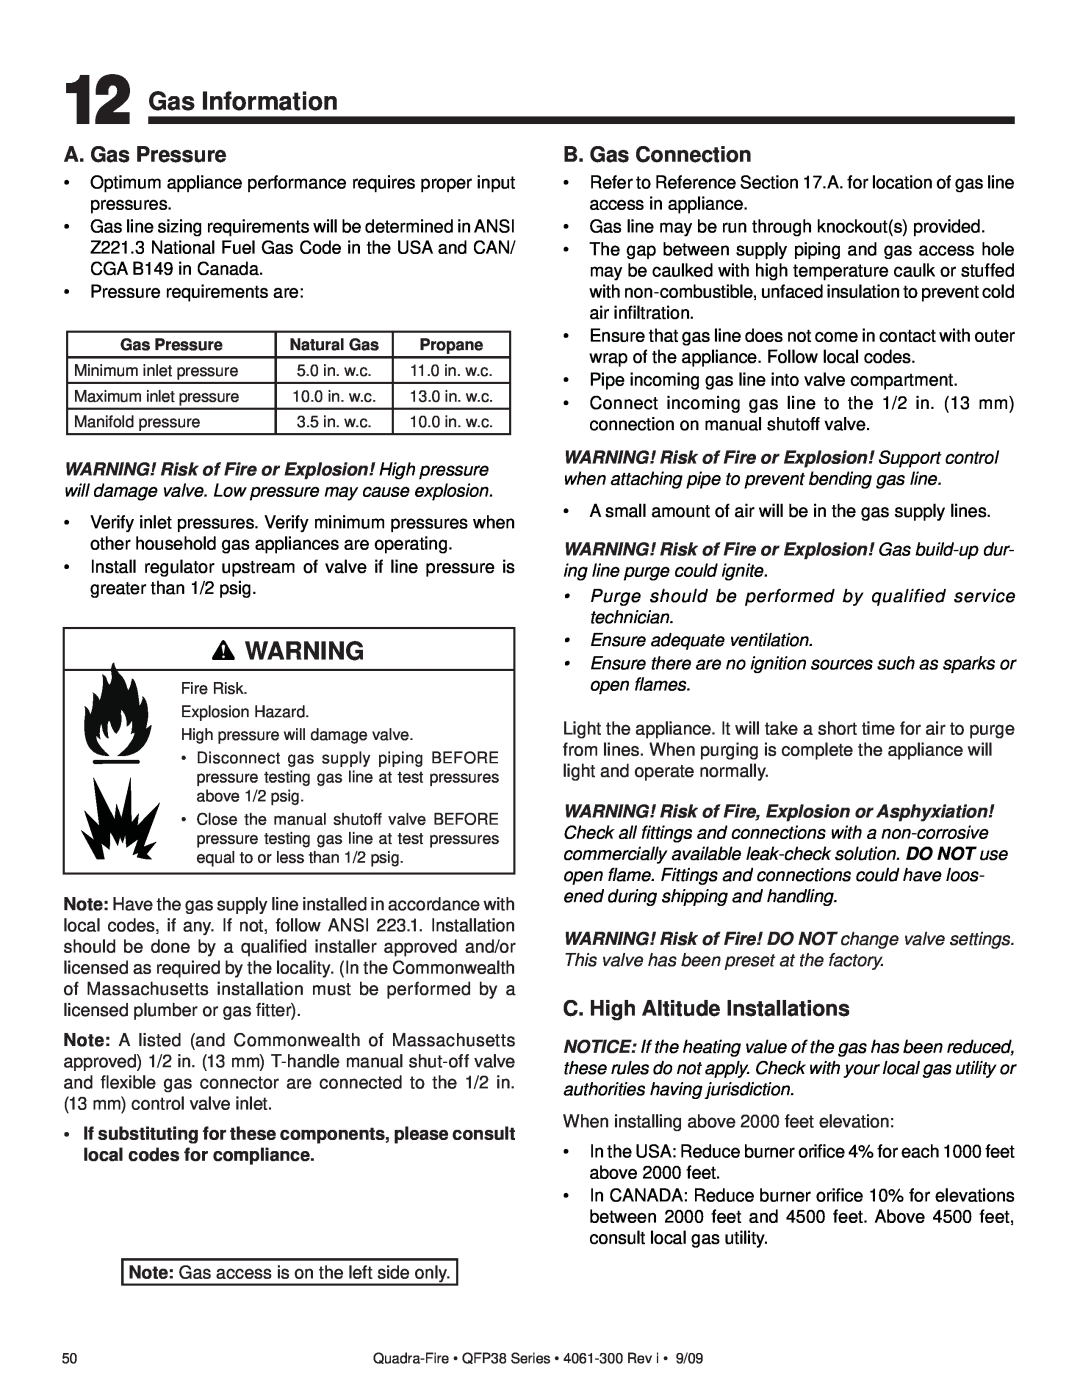 Quadra-Fire QFP38-NG, QFP38-LP Gas Information, A. Gas Pressure, B. Gas Connection, C. High Altitude Installations 